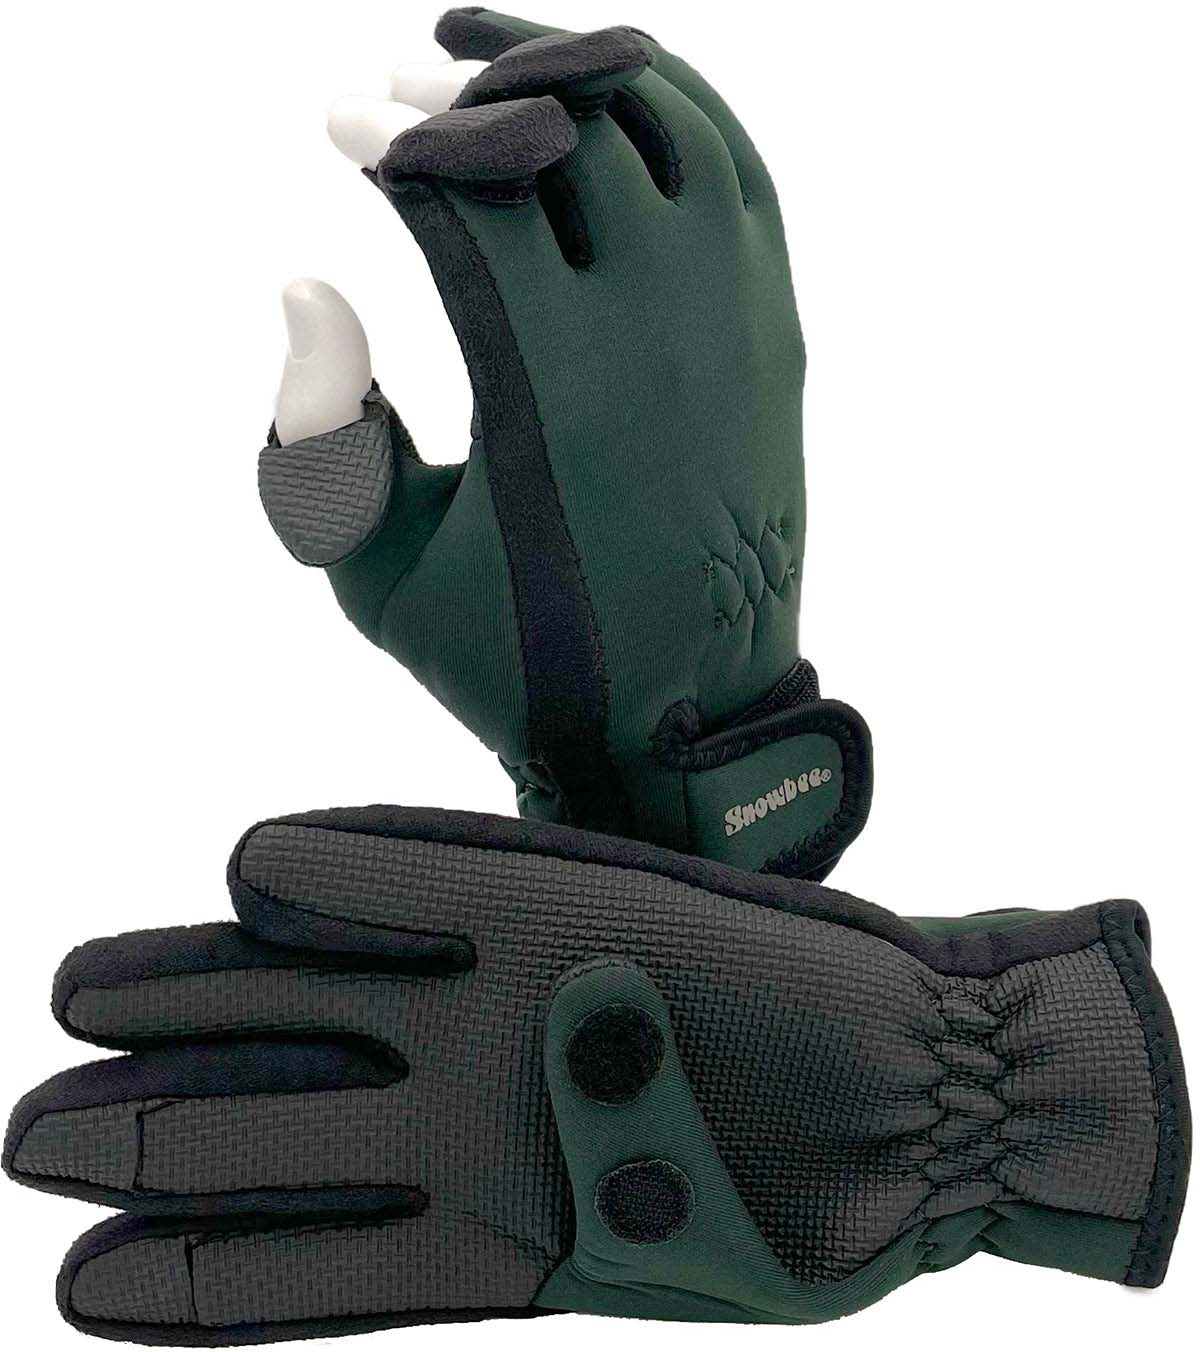 Snowbee Neoprene Gloves w/ Flip Tips